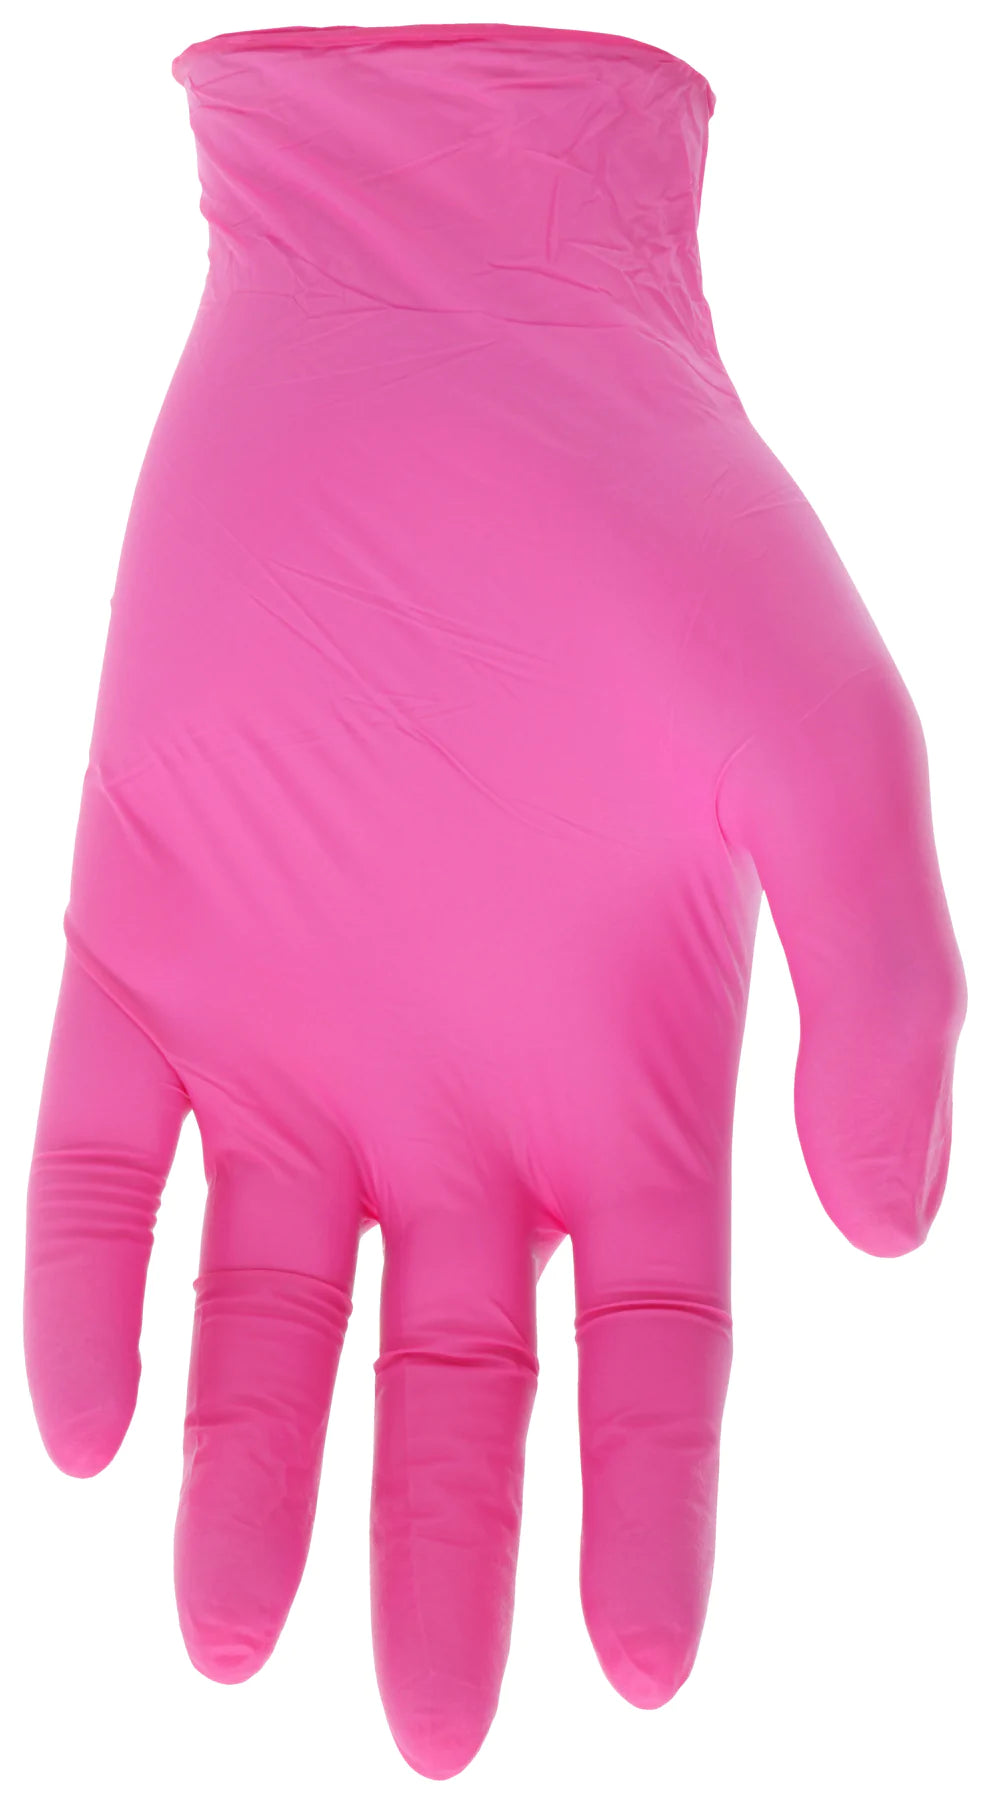 Cheap Bulk Disposable Nitrile Gloves 3.5 Mil Pink – MCR Safety's